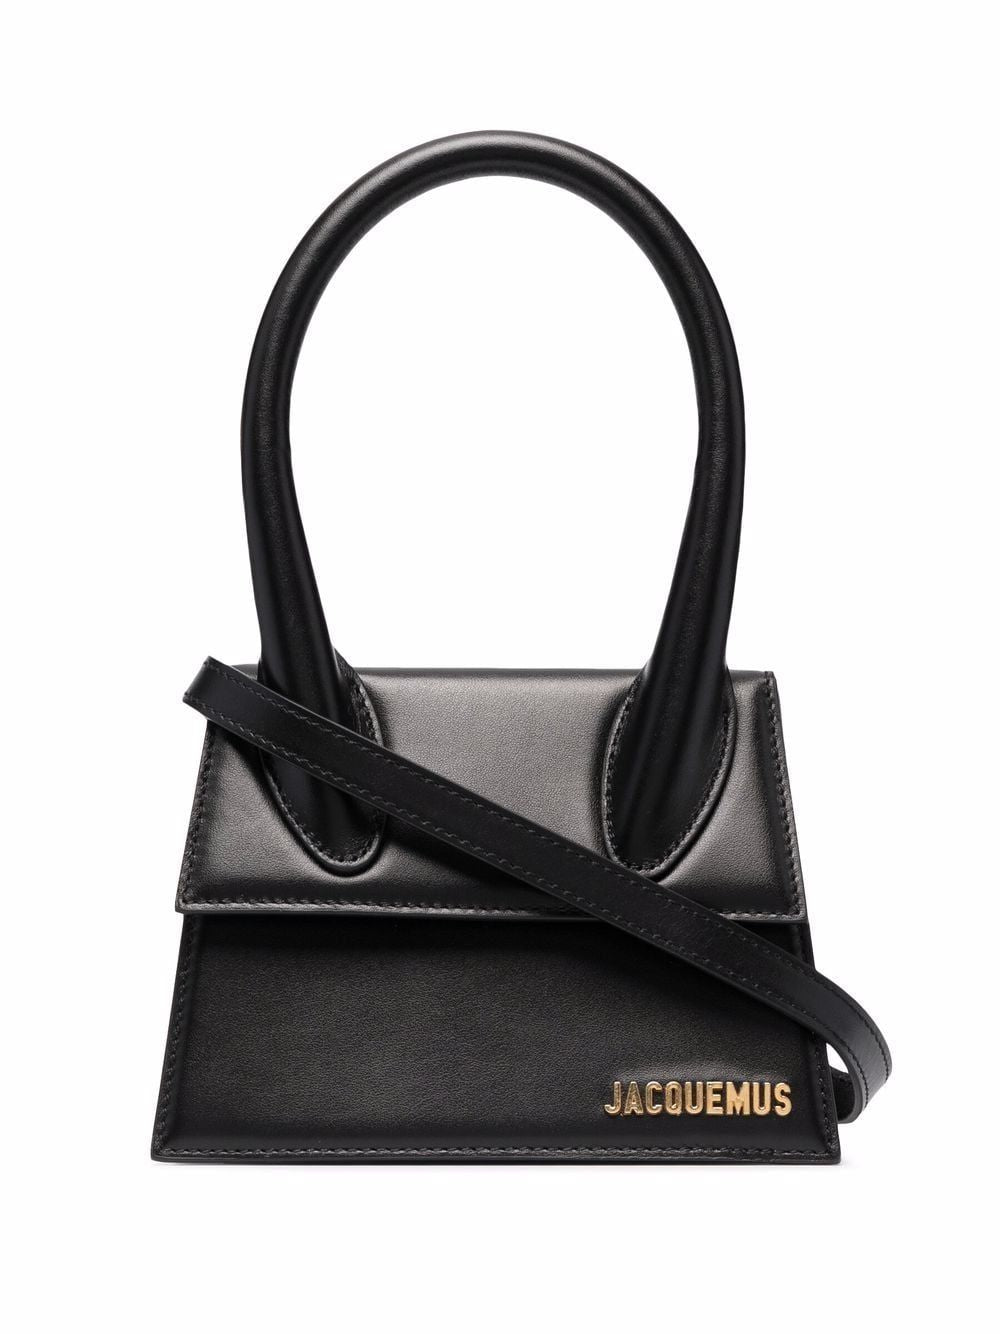 JACQUEMUS Chic Black Leather Top-Handle Shoulder Bag for Women